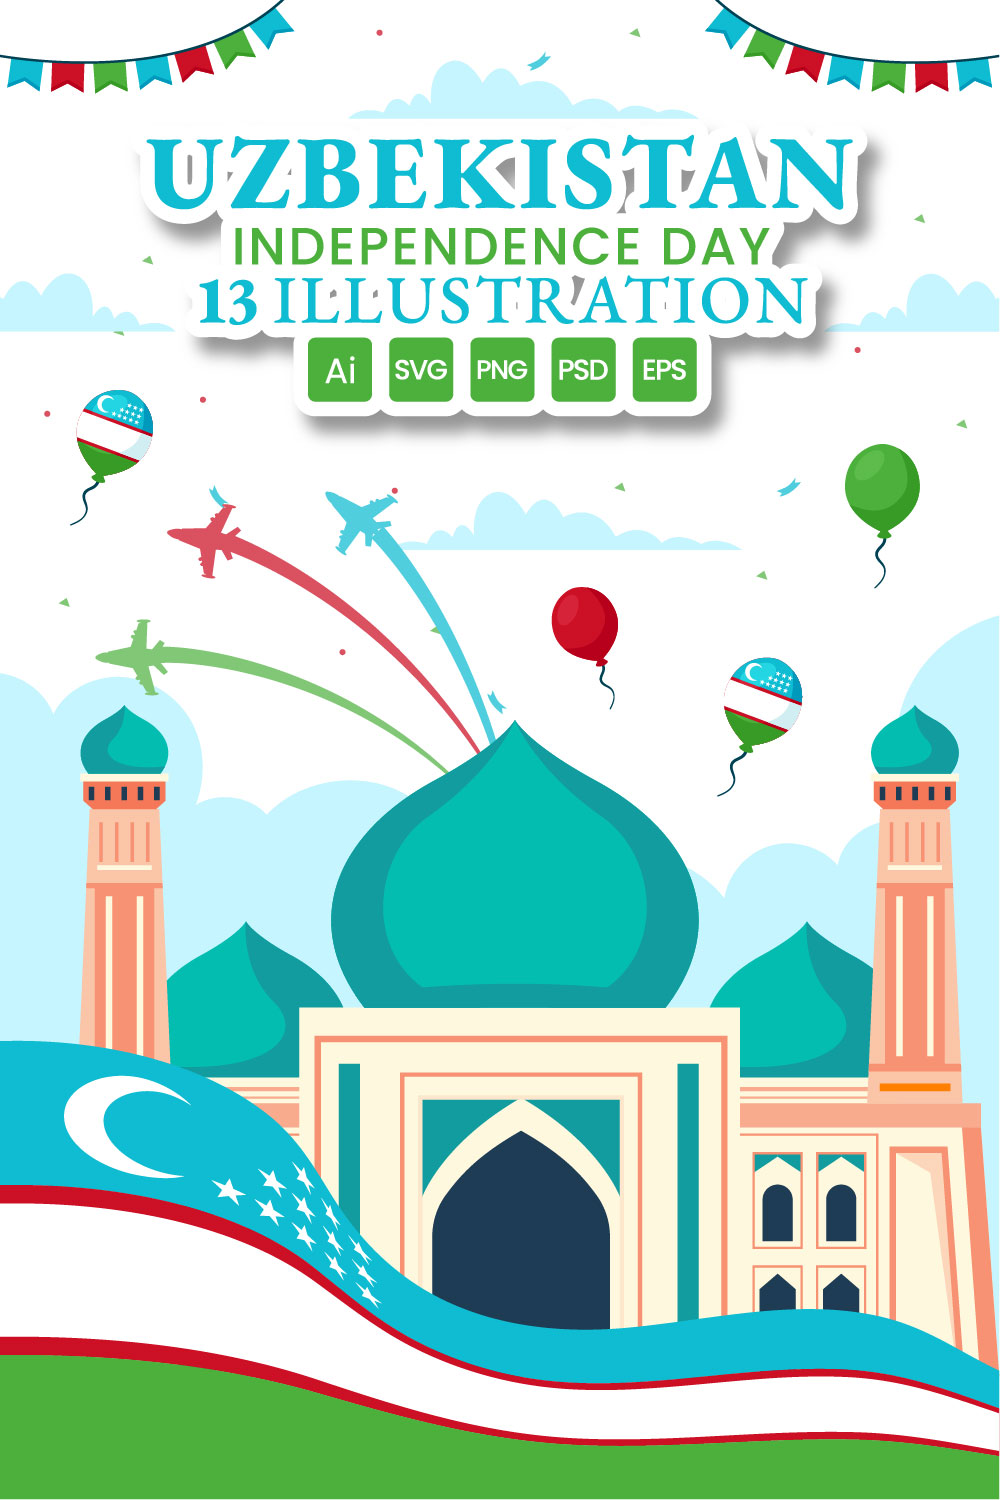 13 Uzbekistan Independence Day Illustration pinterest preview image.